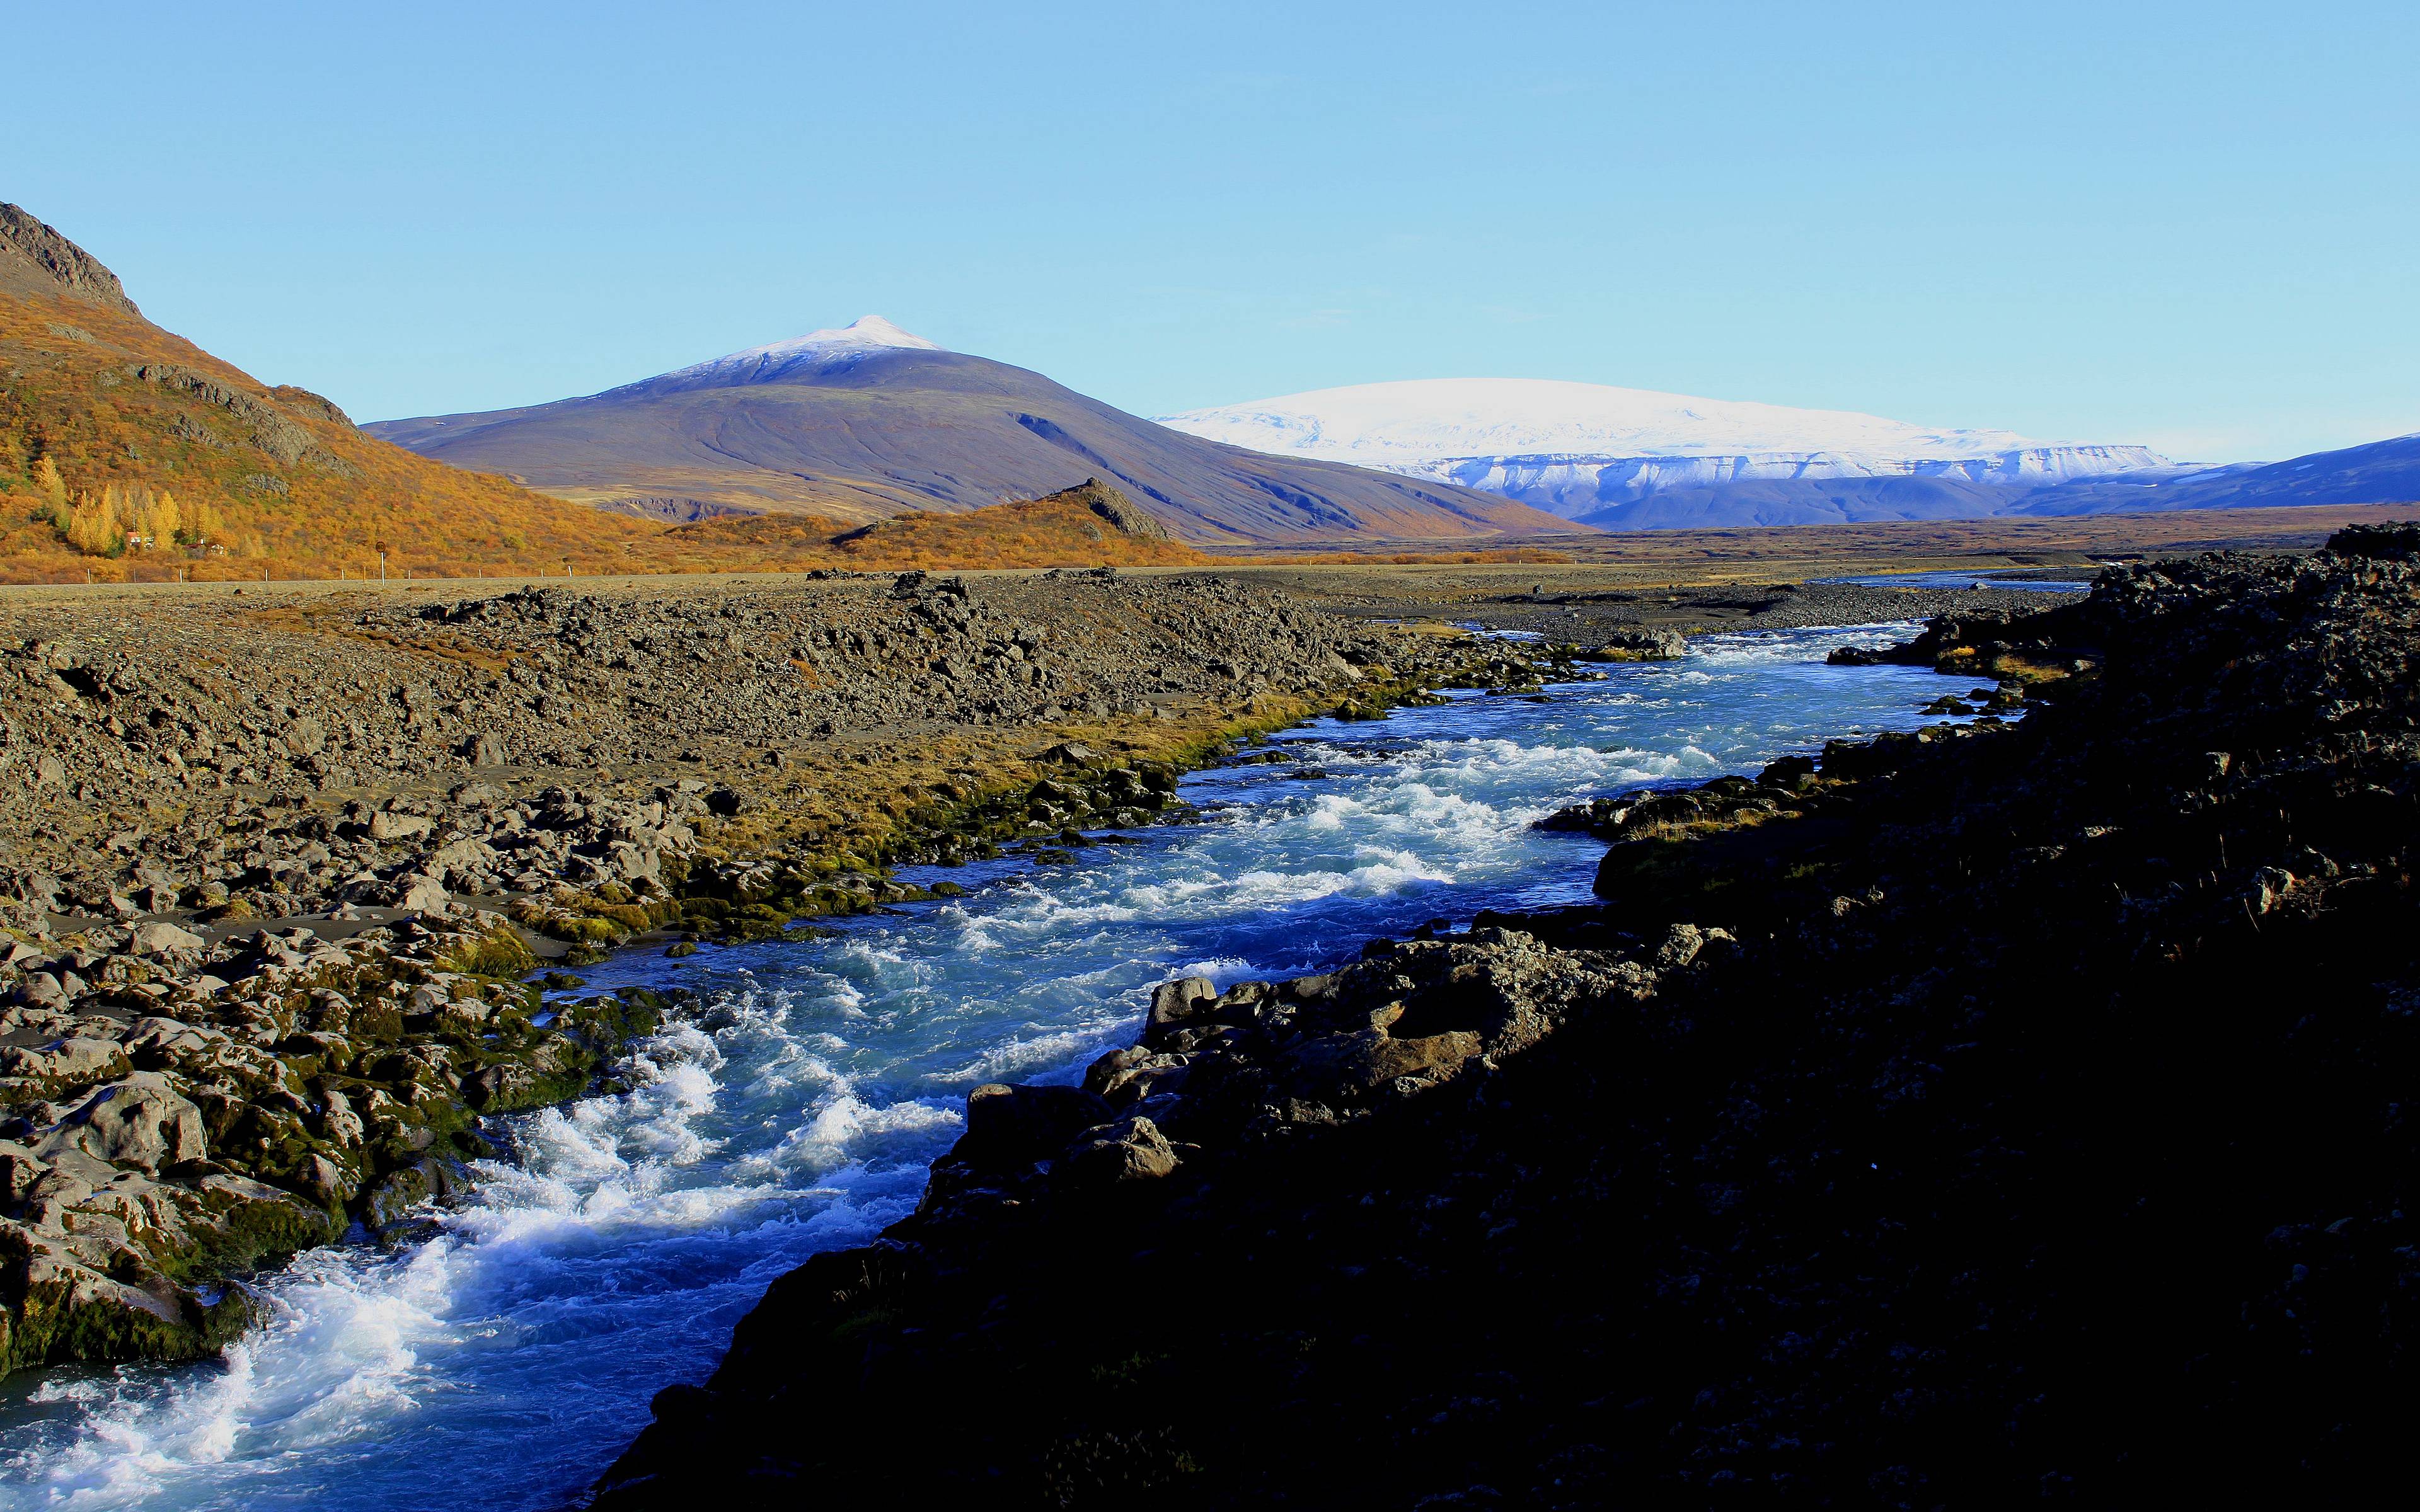 Gletscher Langjökull, Schildvulkan Skjaldbreiður & Lavawasserfälle Hraunfossar 